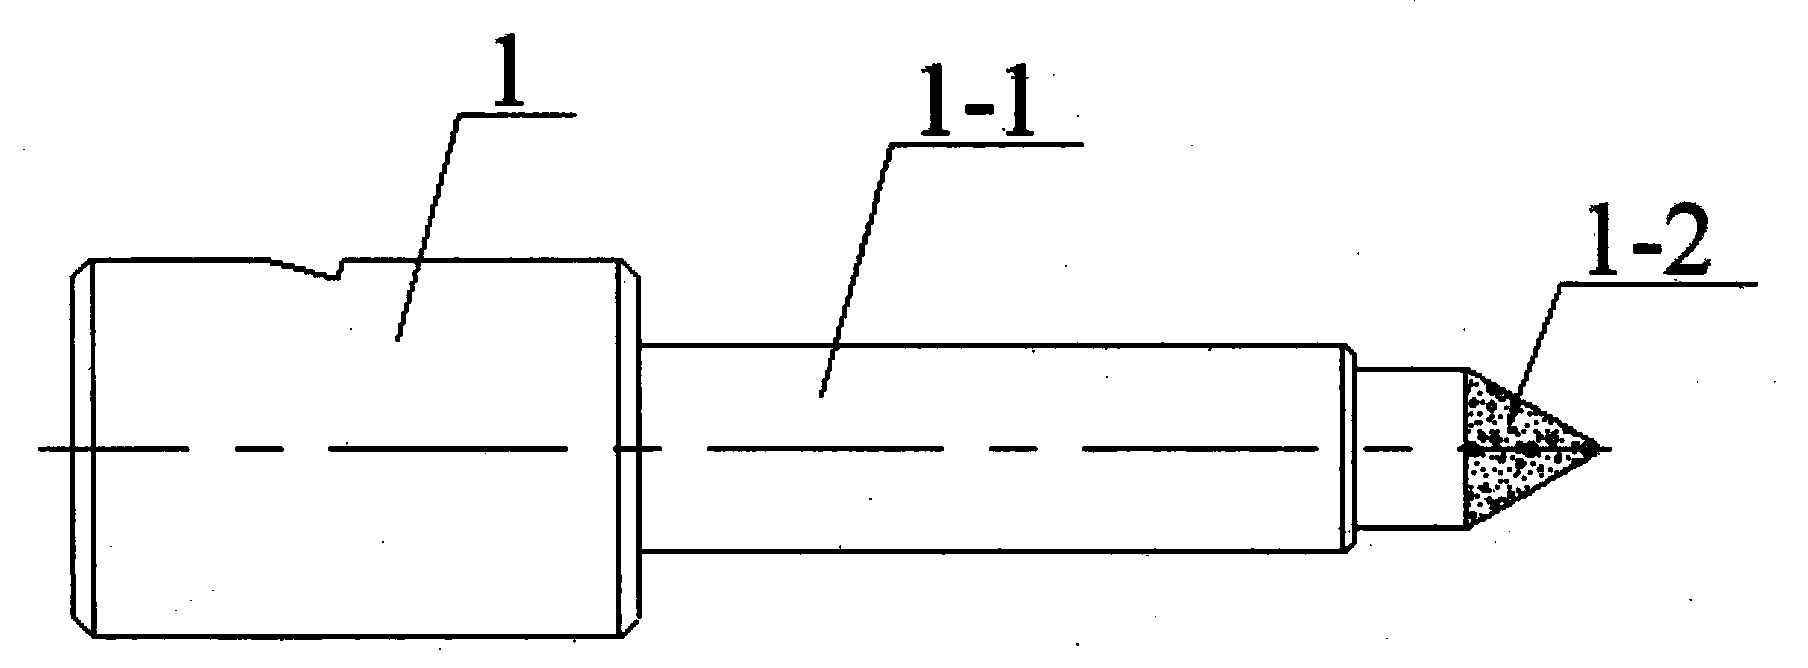 Machining method of valve seat of relief valve